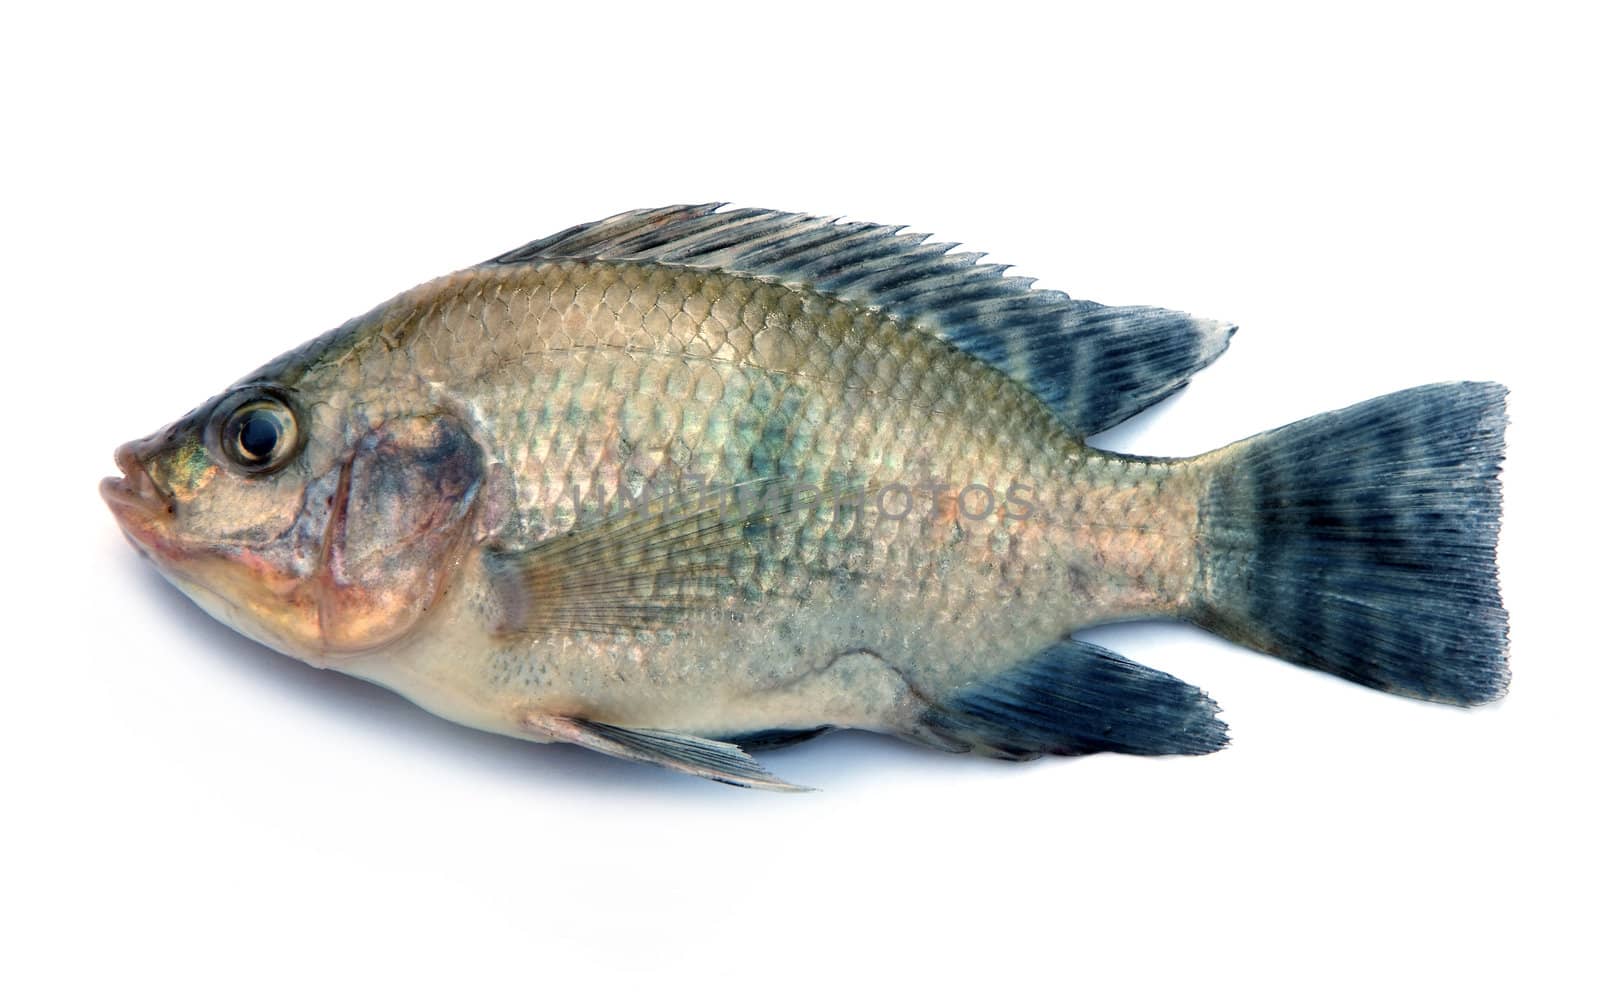 Nile Tilapia fish on white background by opasstudio